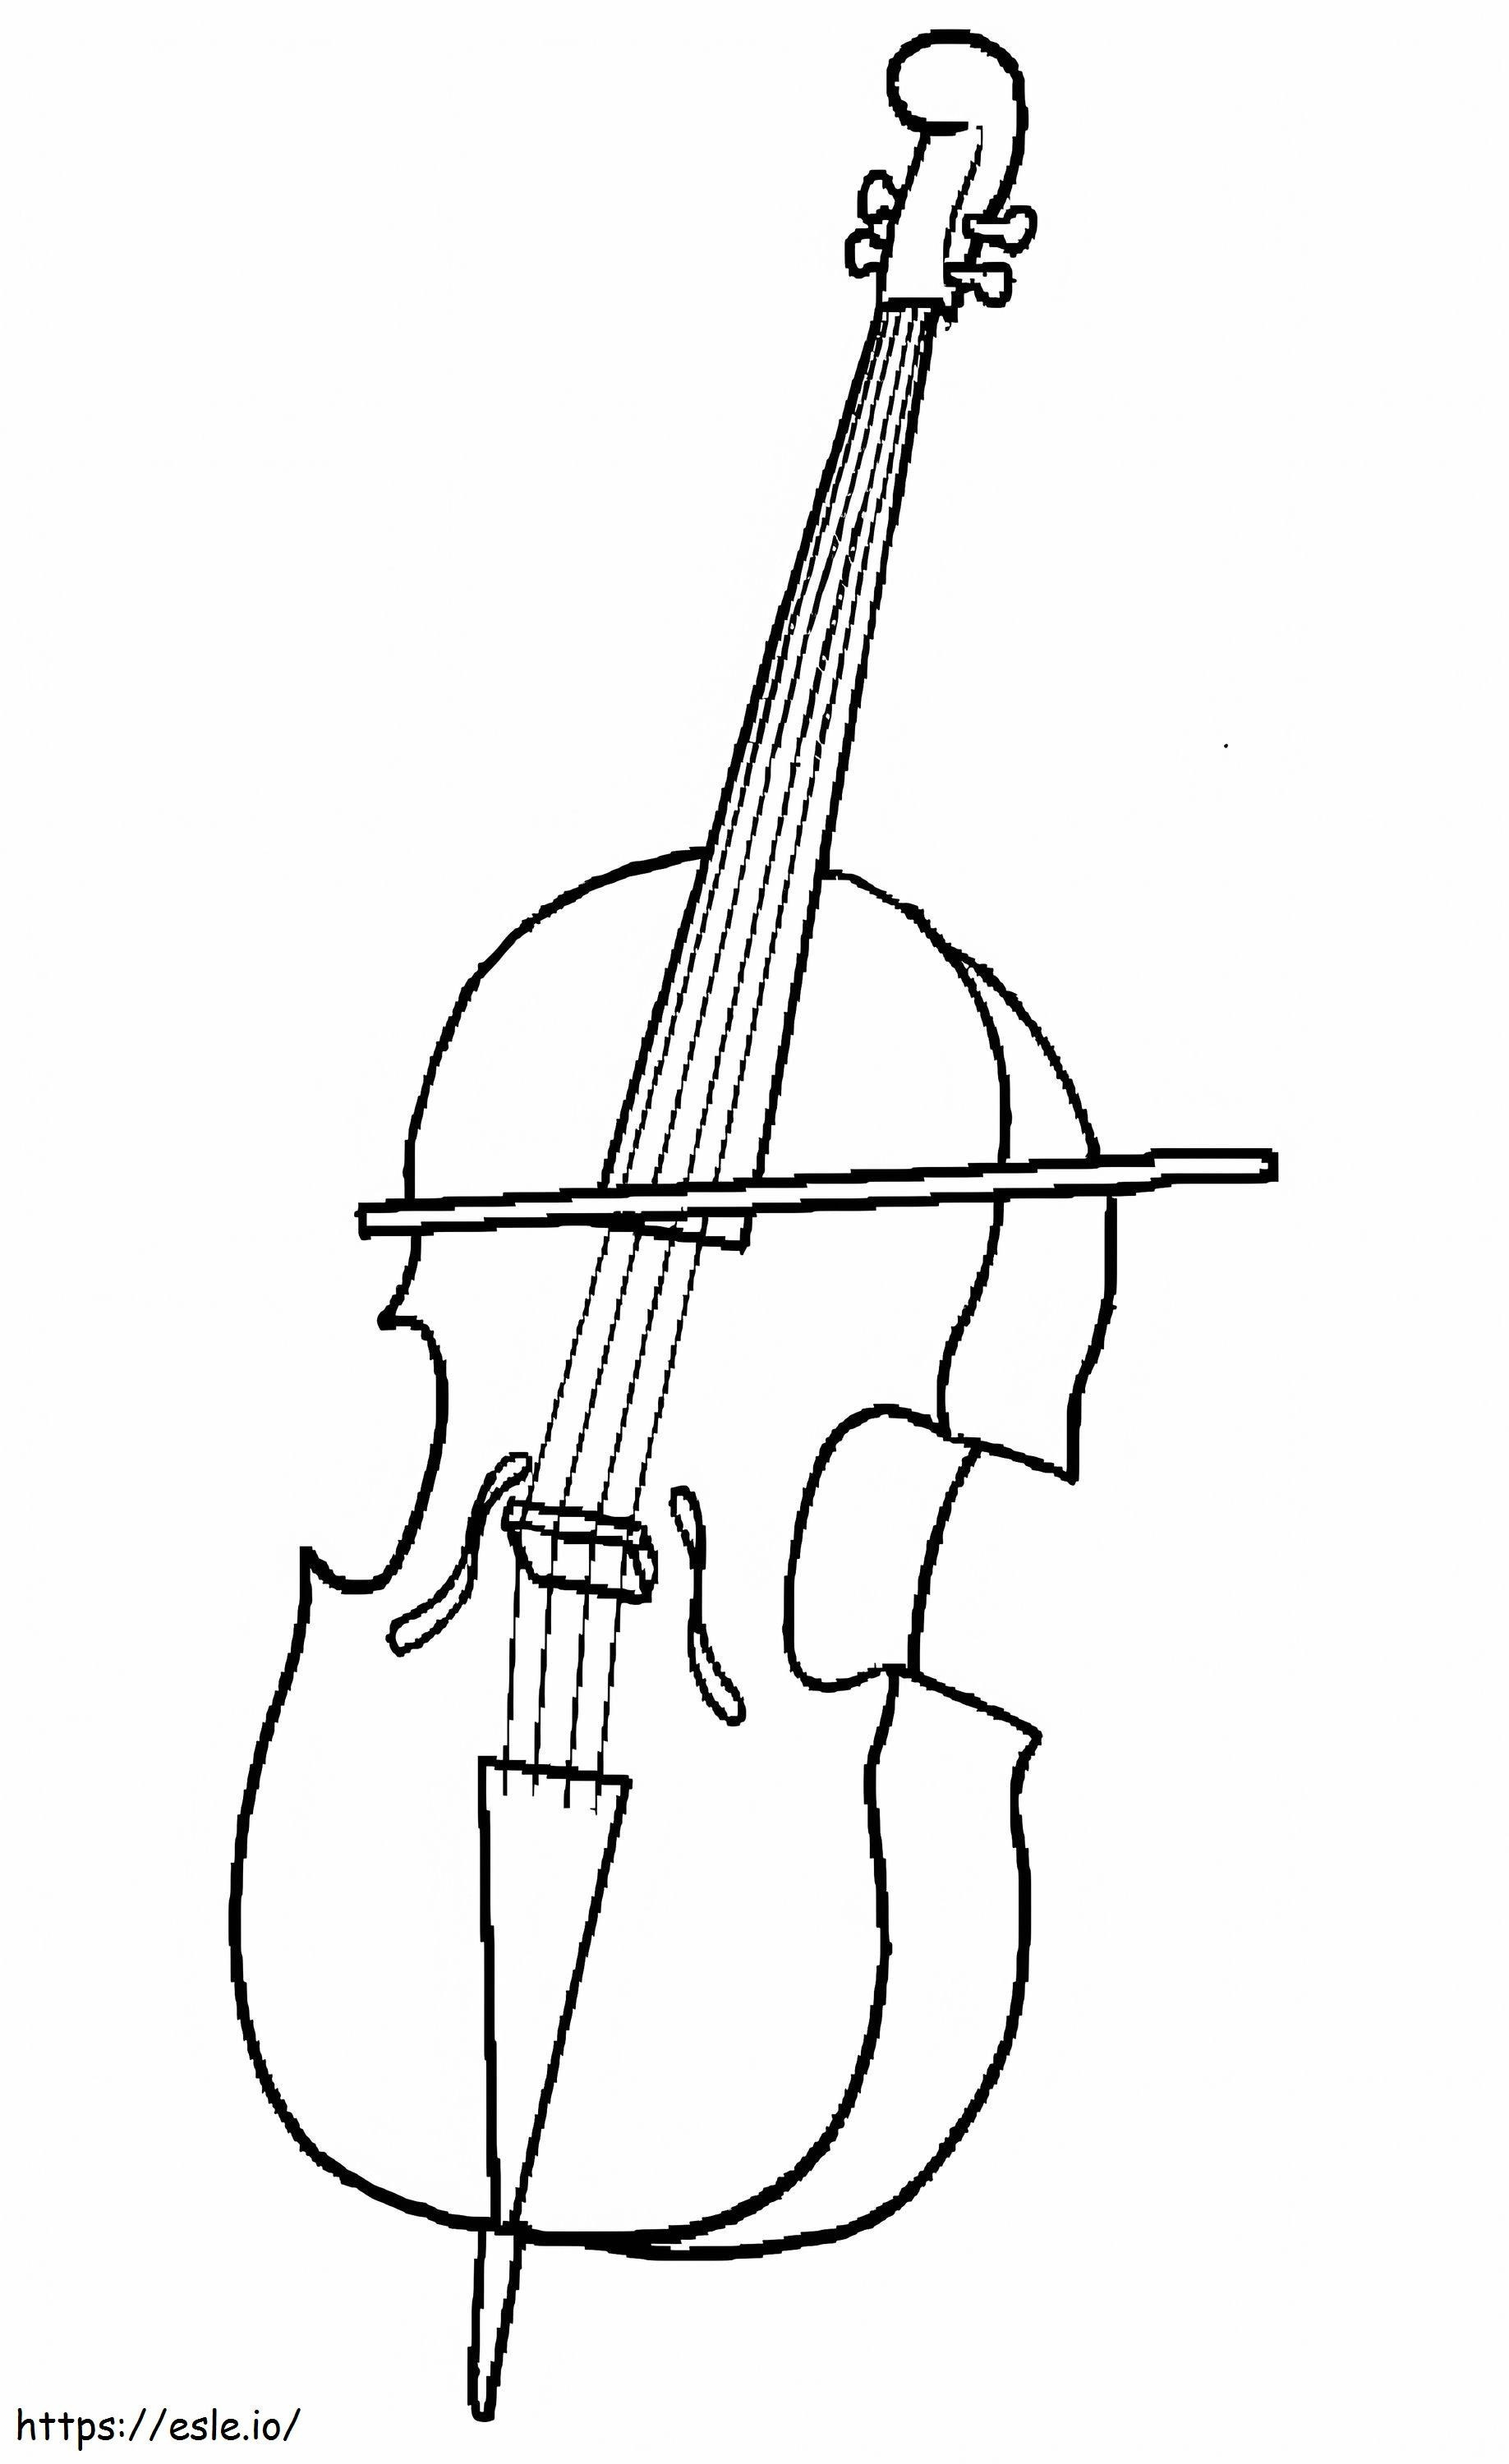 Kostenloses Cello ausmalbilder